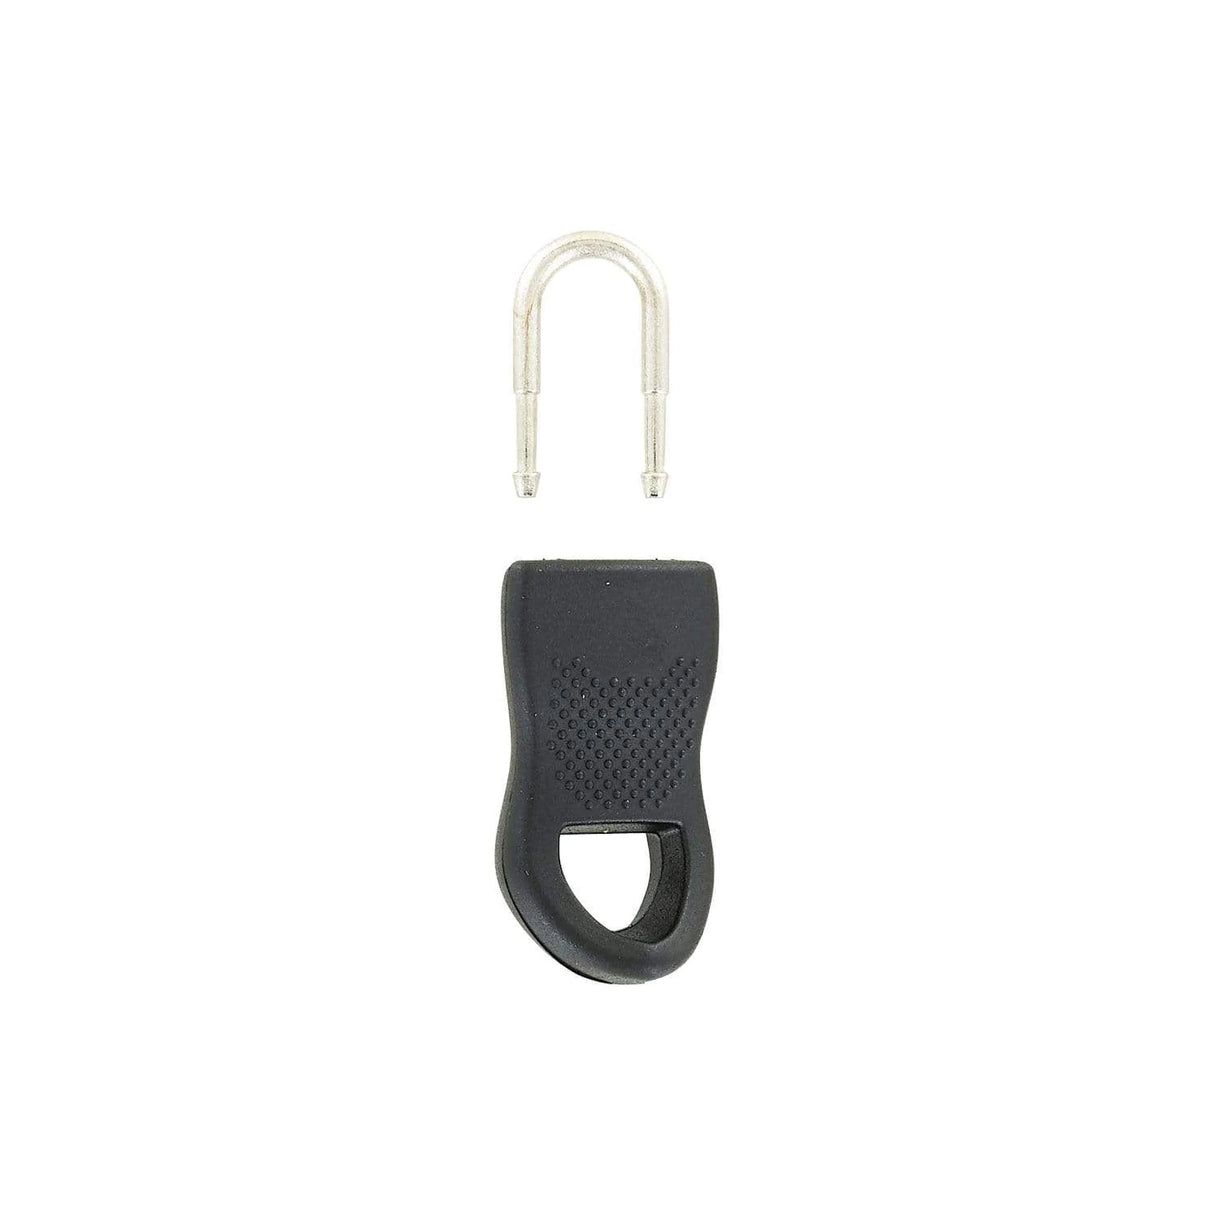 1" Black, Small Zipper Fixer, Plastic, #ZF-1